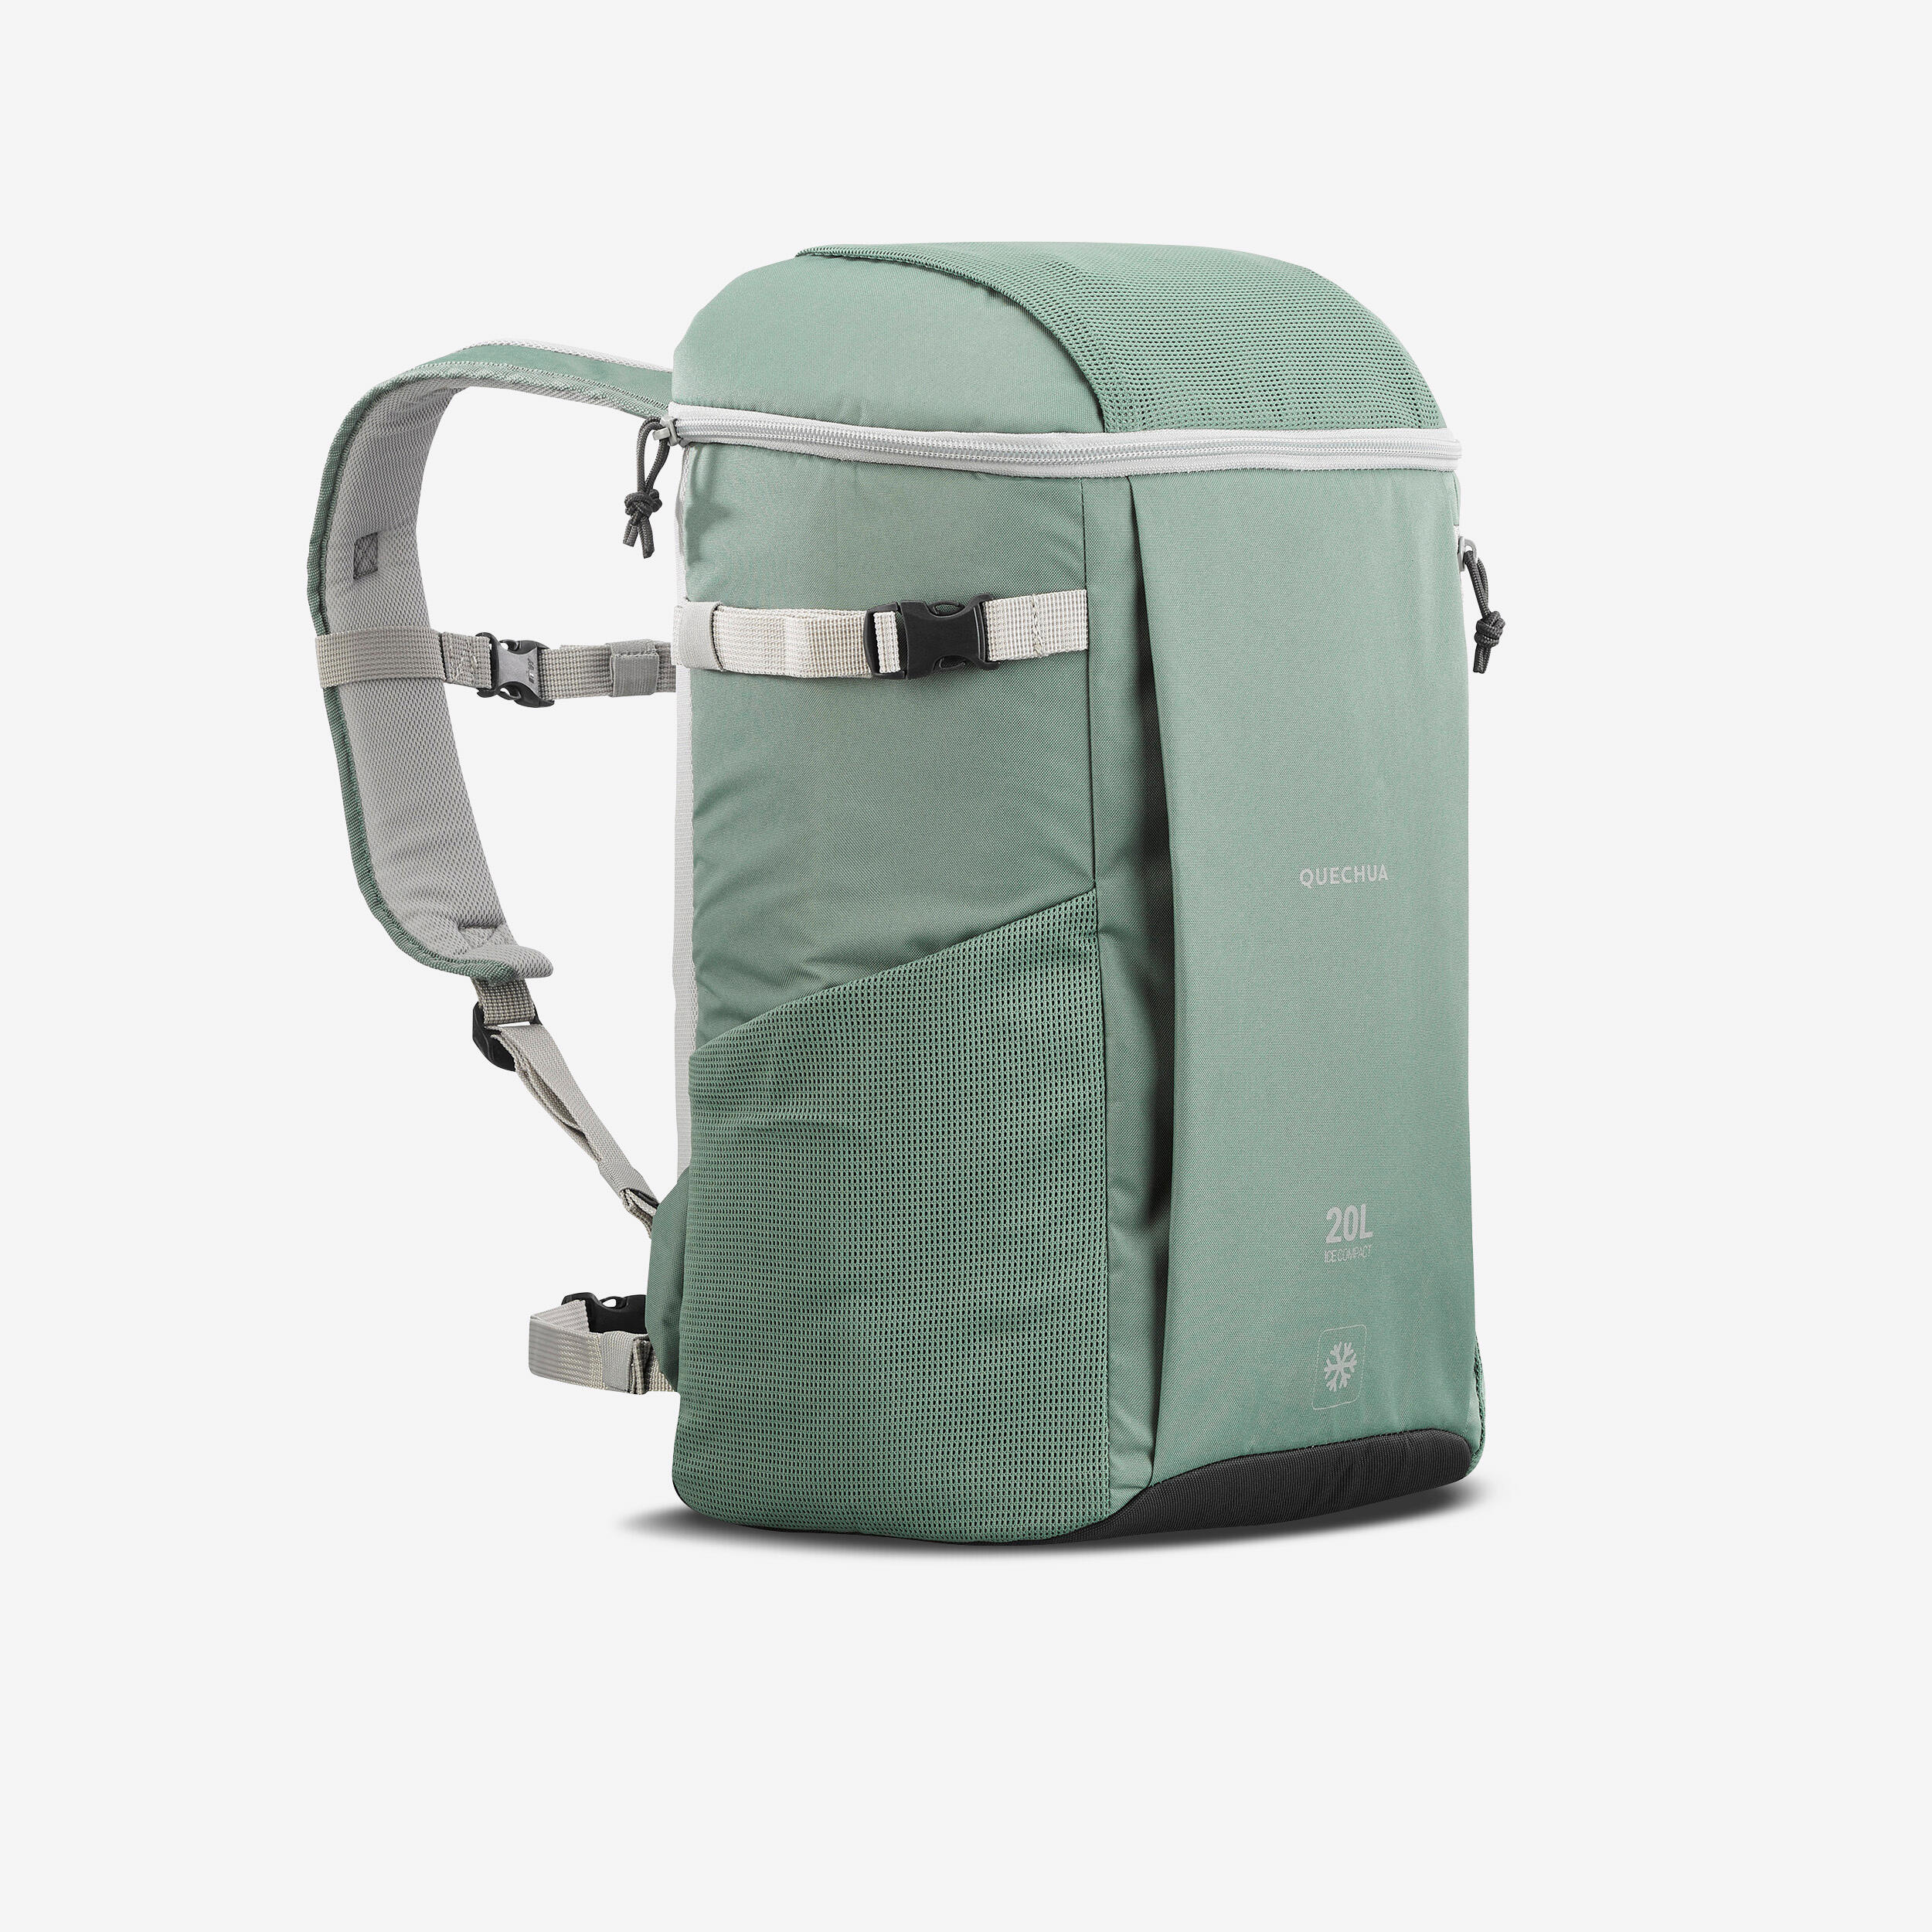 Isothermal Camping Backpack - NH 100 Green